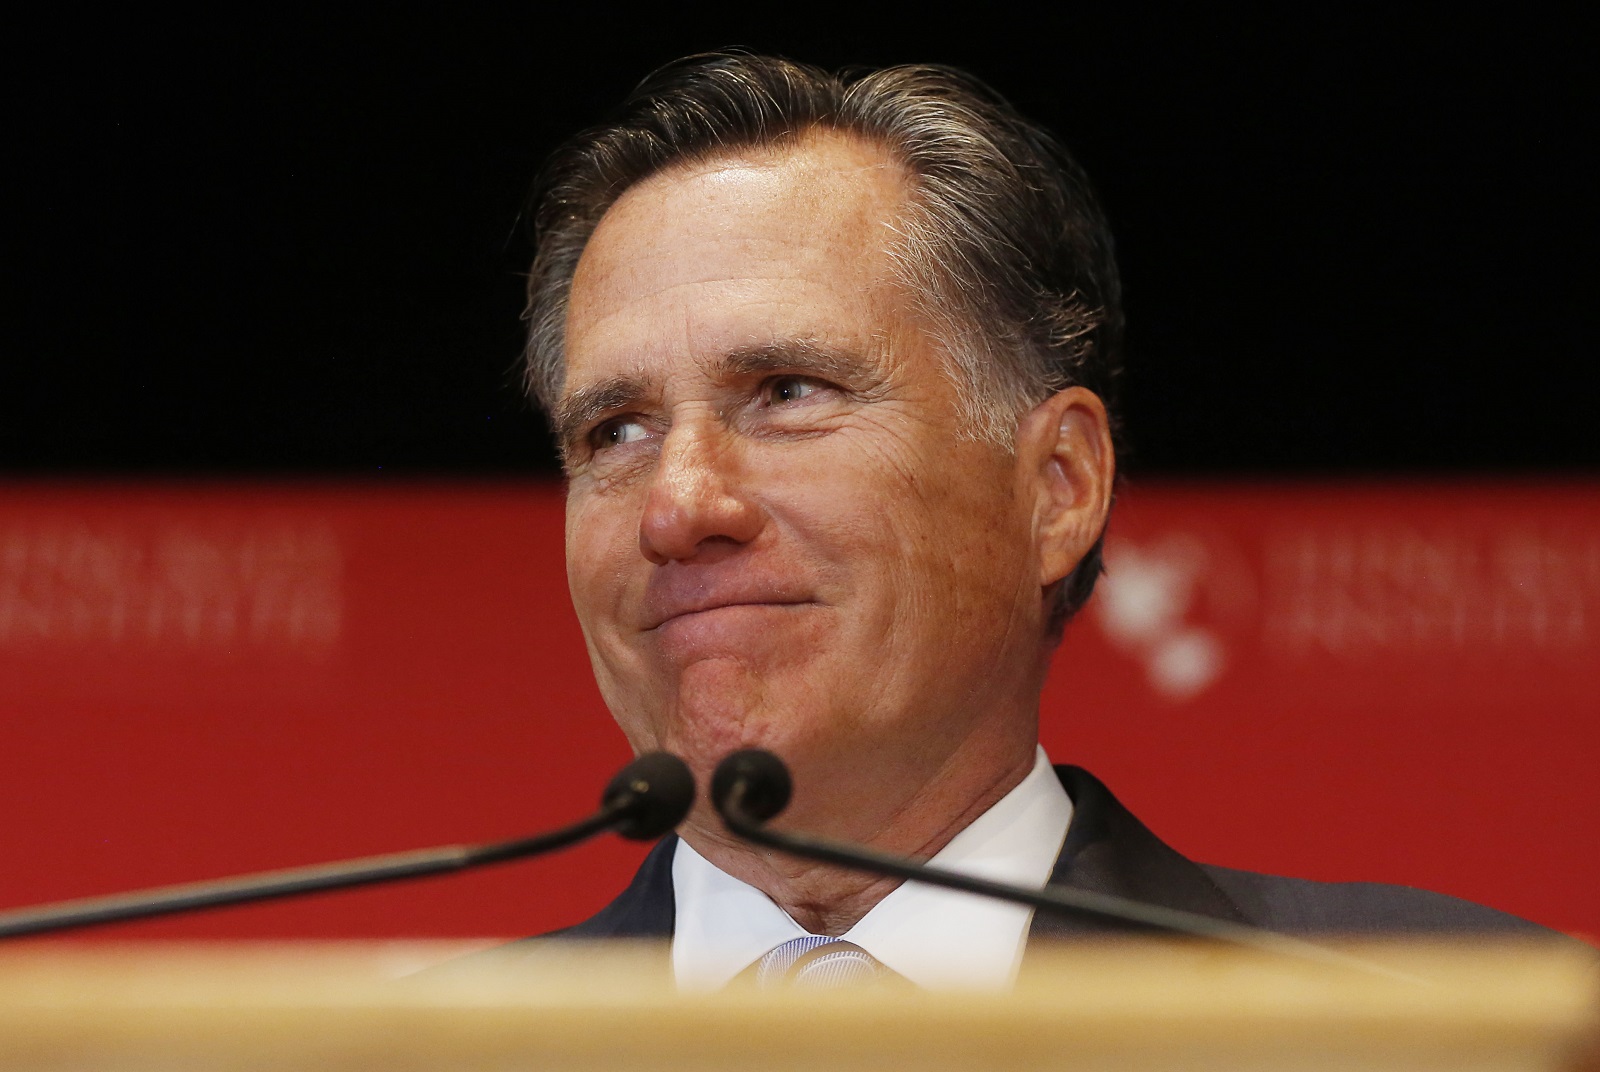 Mitt Romney's Revenge: Working to Impeach Donald Trump? | The National Interest